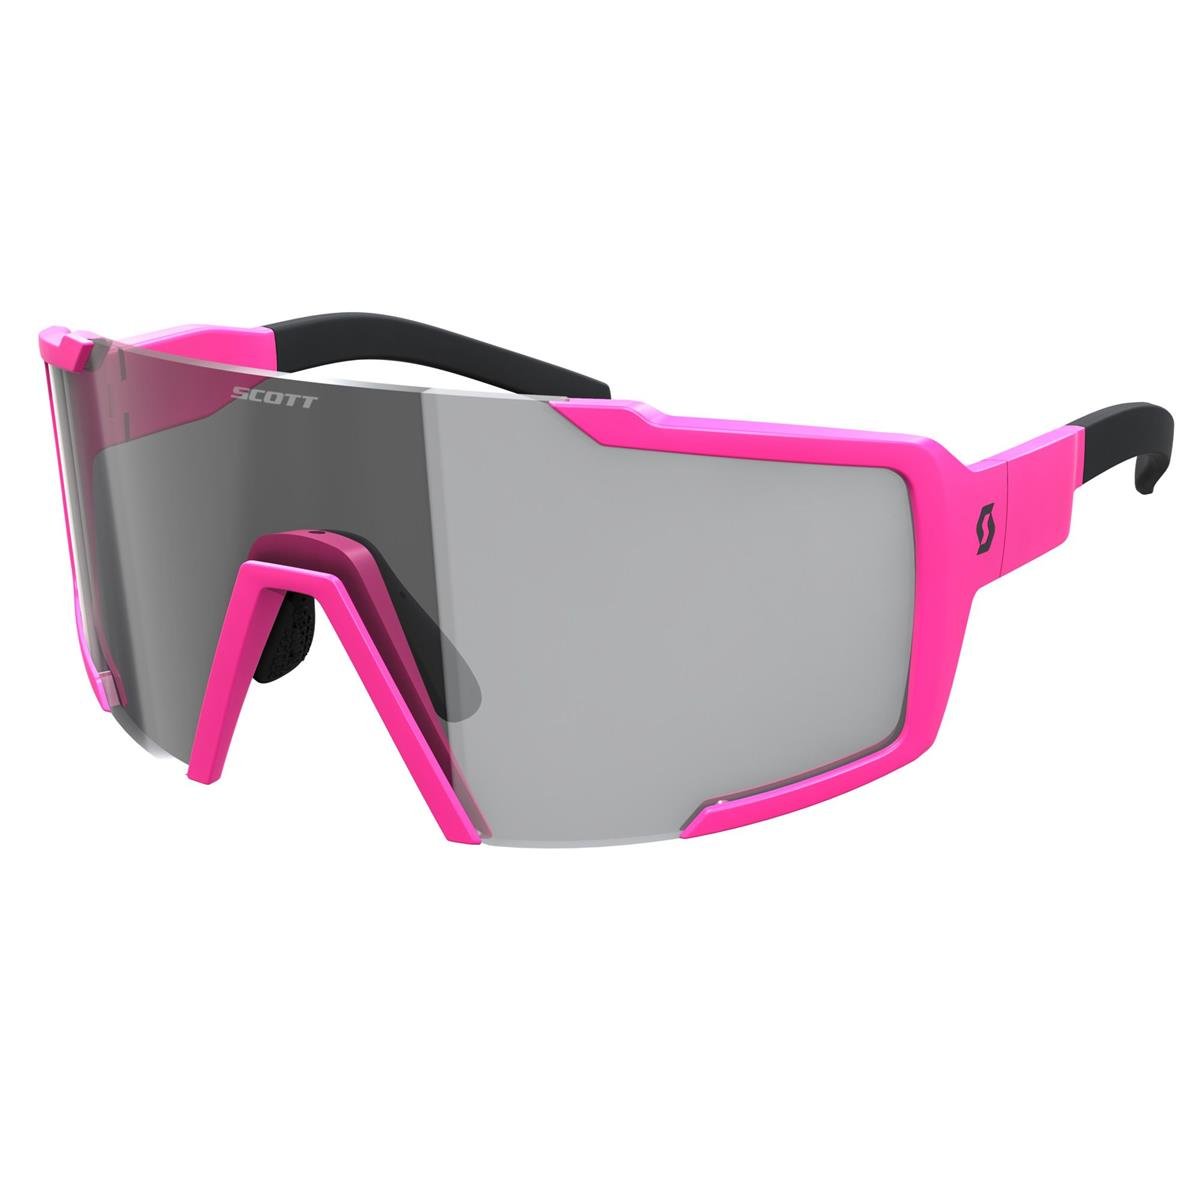 Scott Sportbrille Shield Compact LS Acid Pink - Gray Light Sensitive